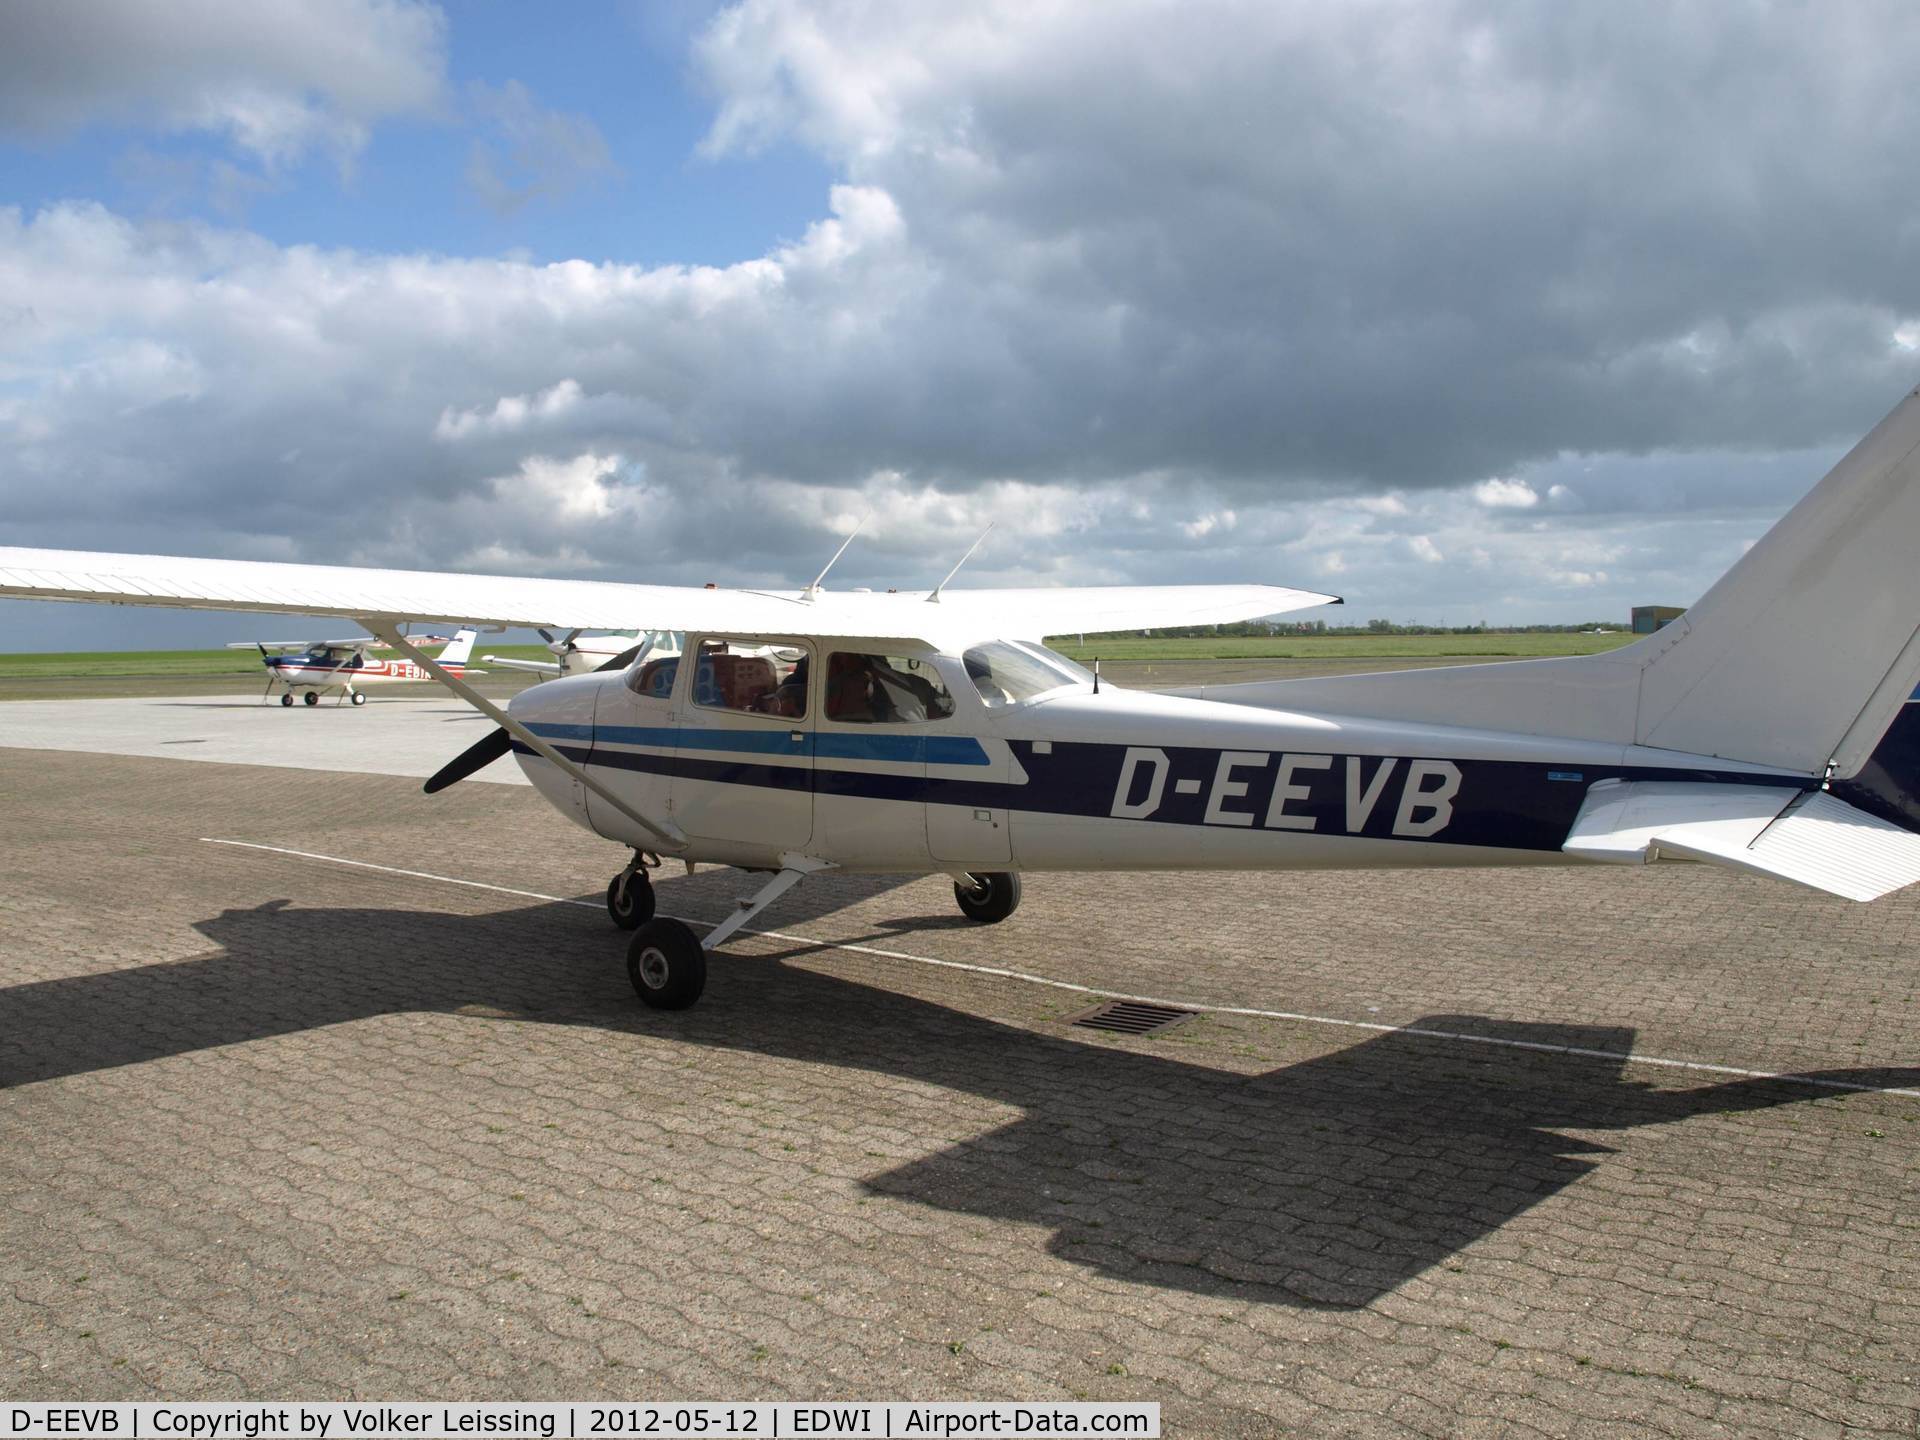 D-EEVB, 1975 Reims F172M Skyhawk C/N 1209, parking